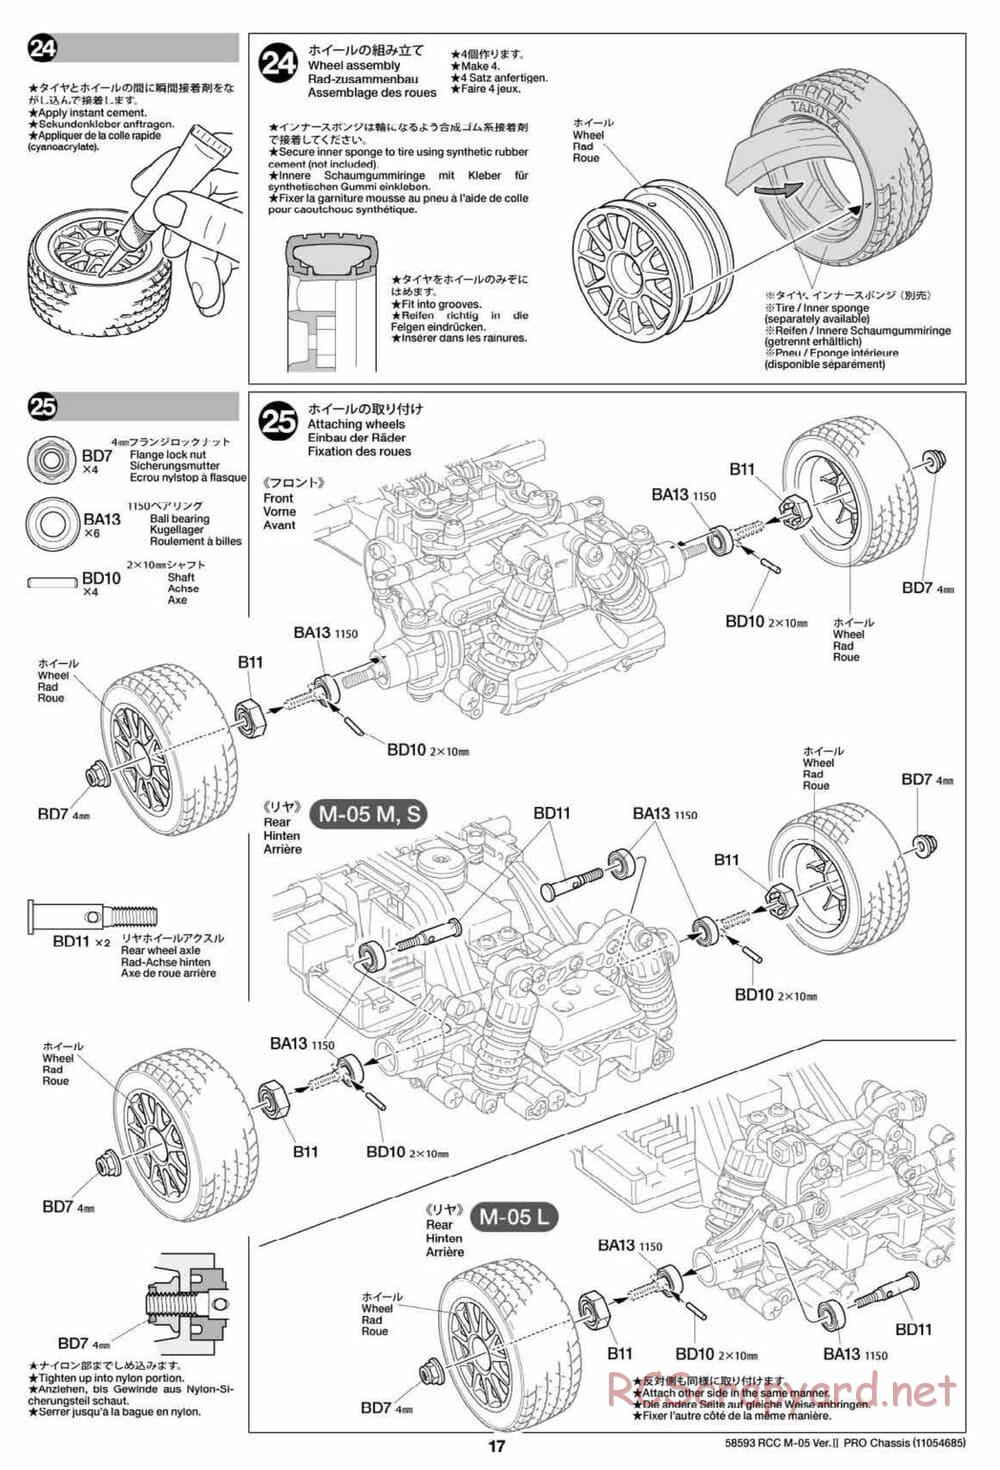 Tamiya - M-05 Ver.II Pro Chassis - Manual - Page 17